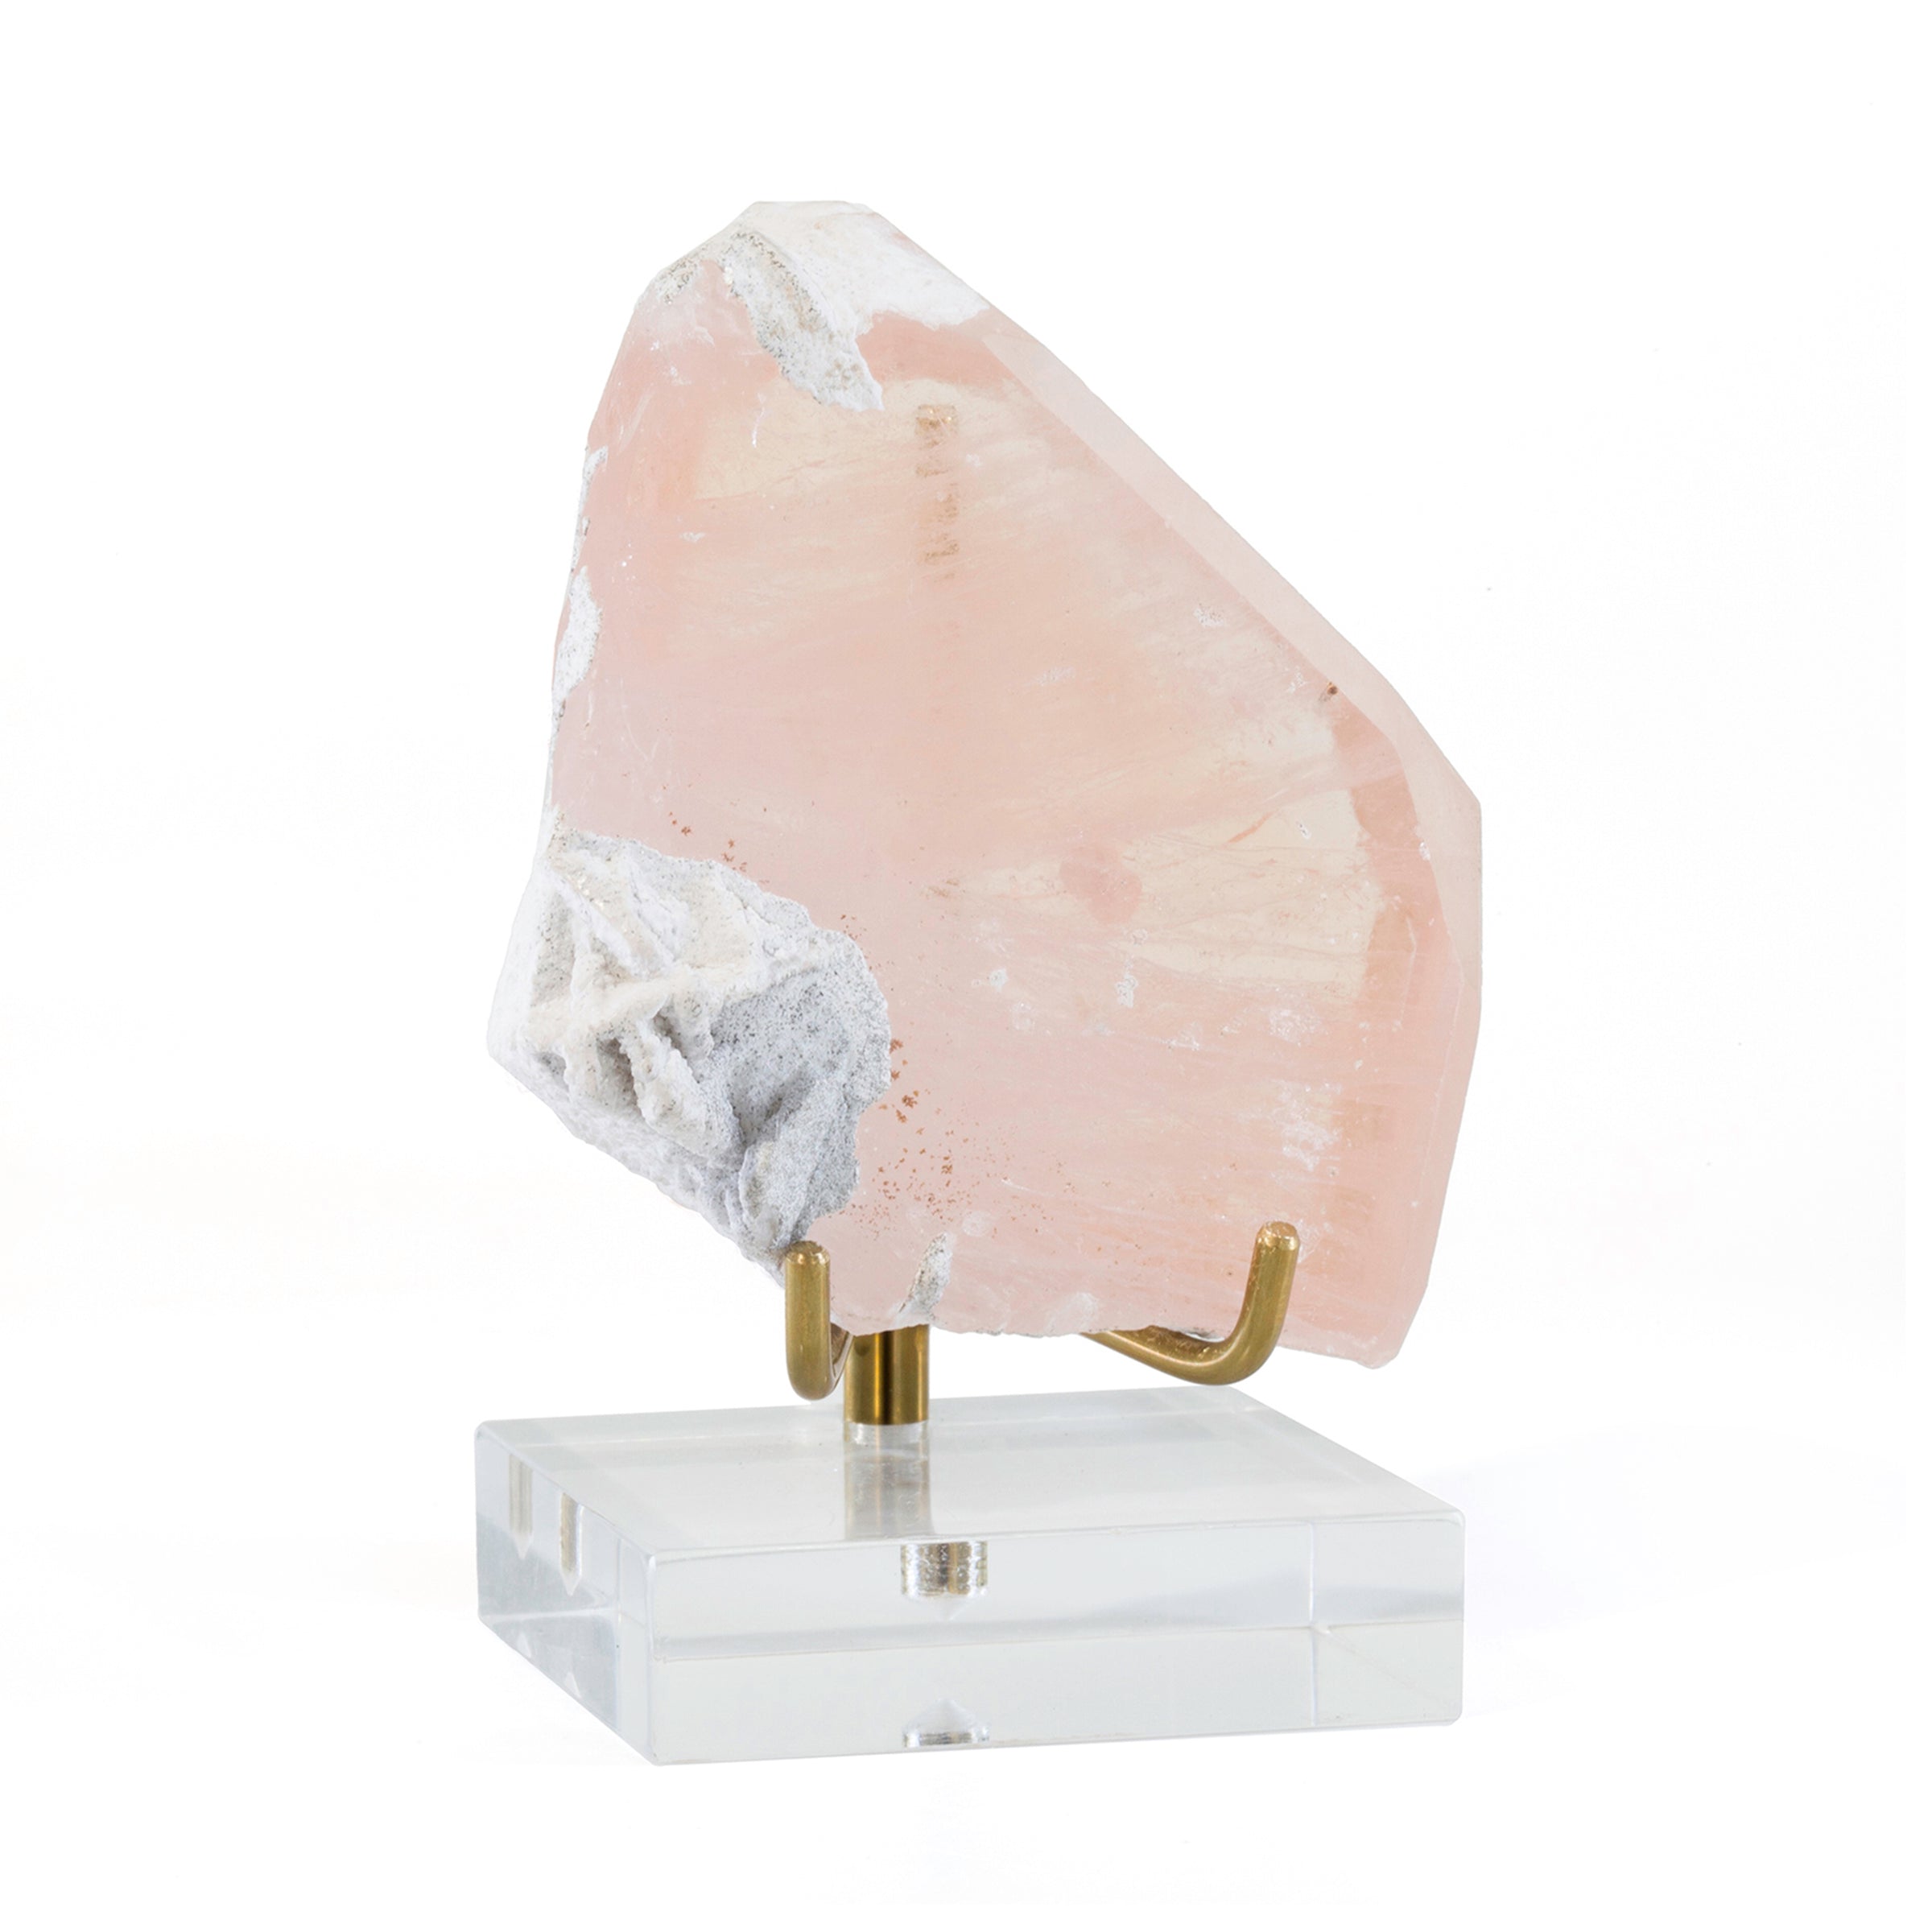 Morganite 2.2 inch 615 carat Natural Gem Crystal - Pakistan - HHX-194 - Crystalarium